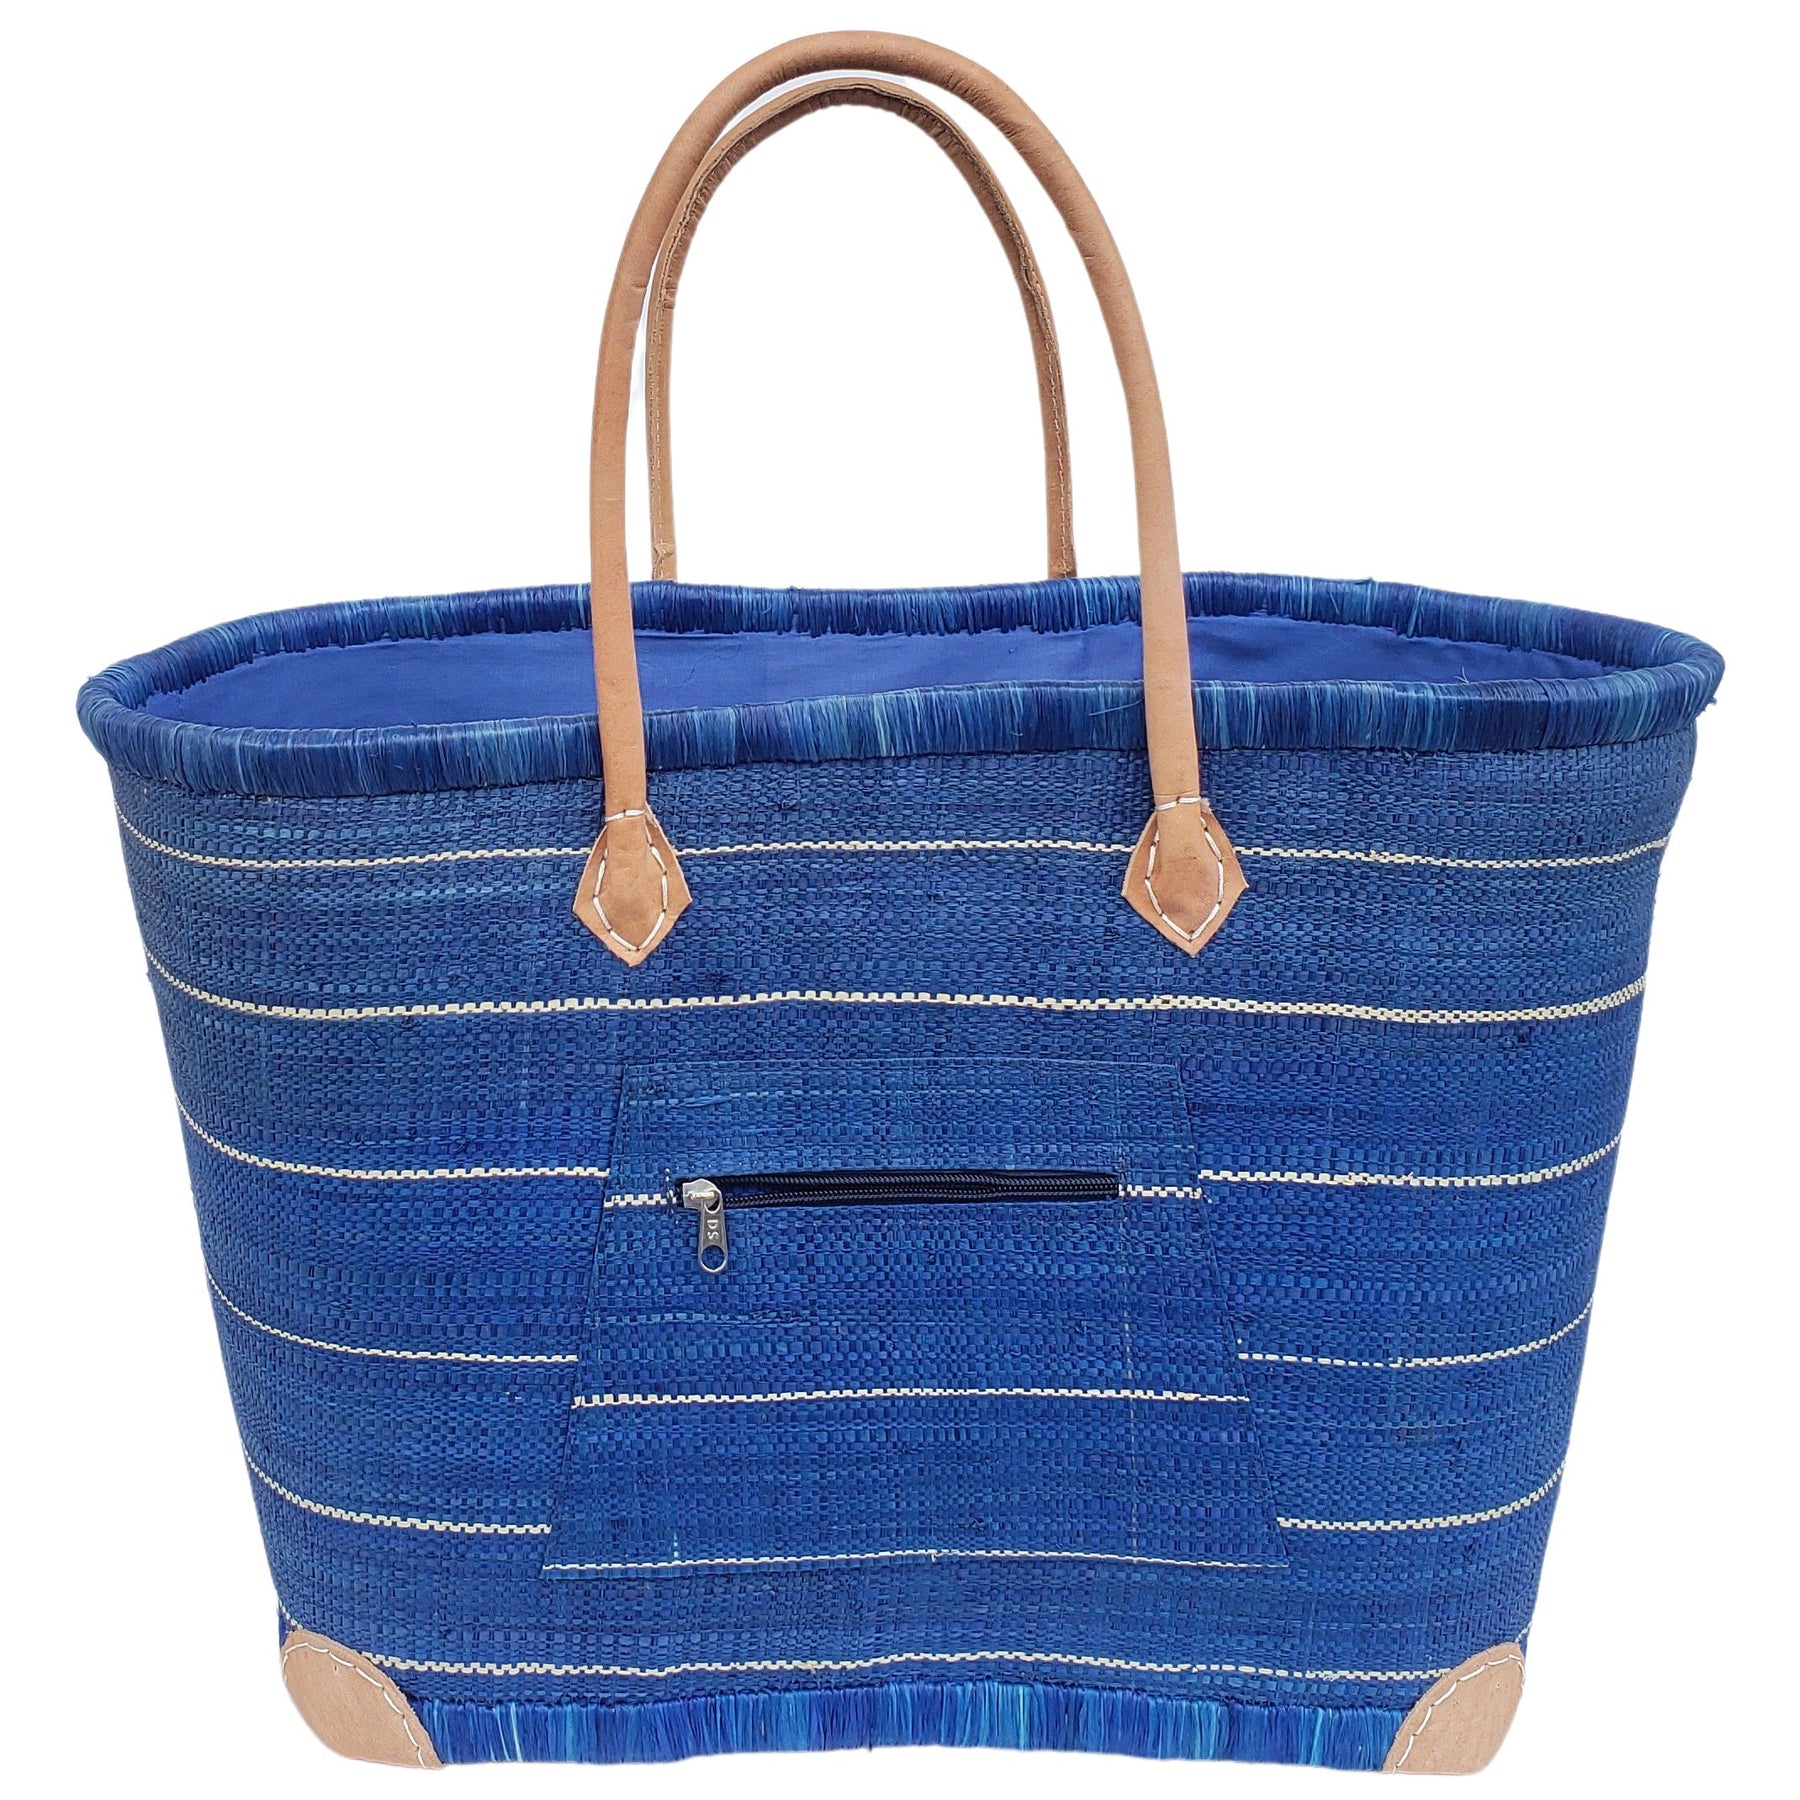 34 of 59: Adjanie: Authentic Madagascar Raffia and Leather Tote Bag (Blue Stripe)